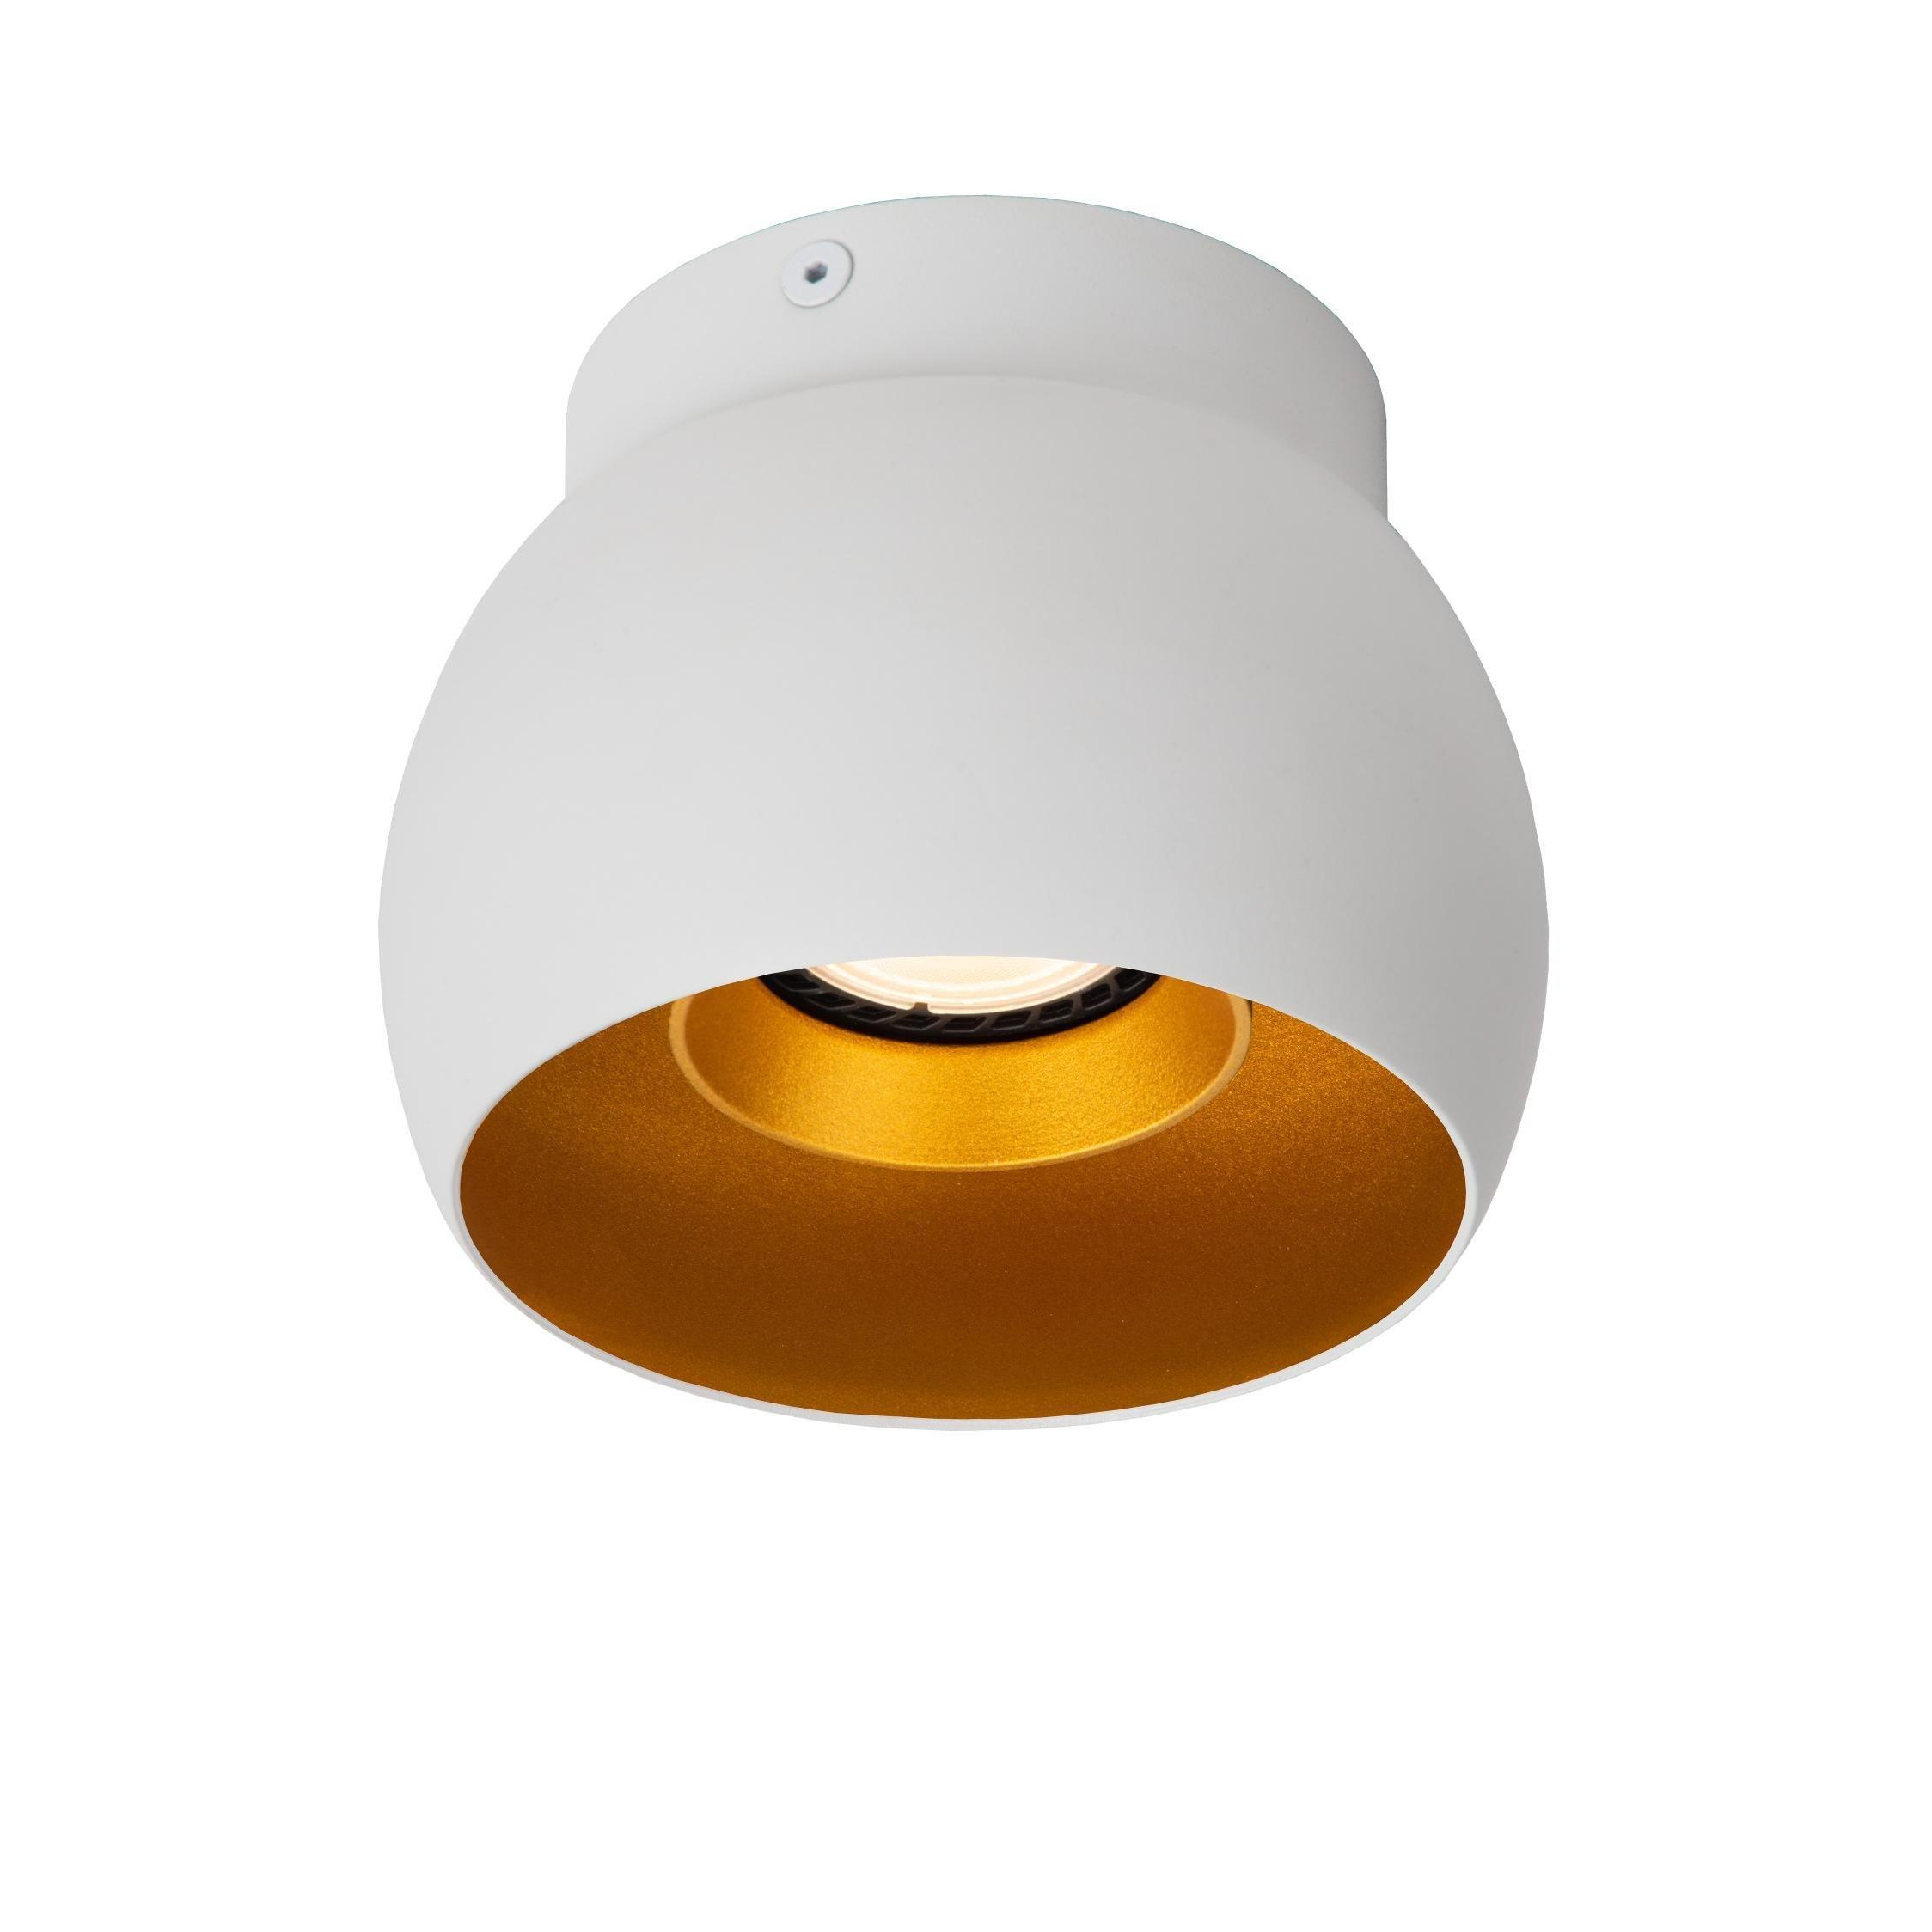 Lucide TORBEN Ceiling Spotlight Stylish Dimmable LED Lamp Indoor Decor Lighting - image 1